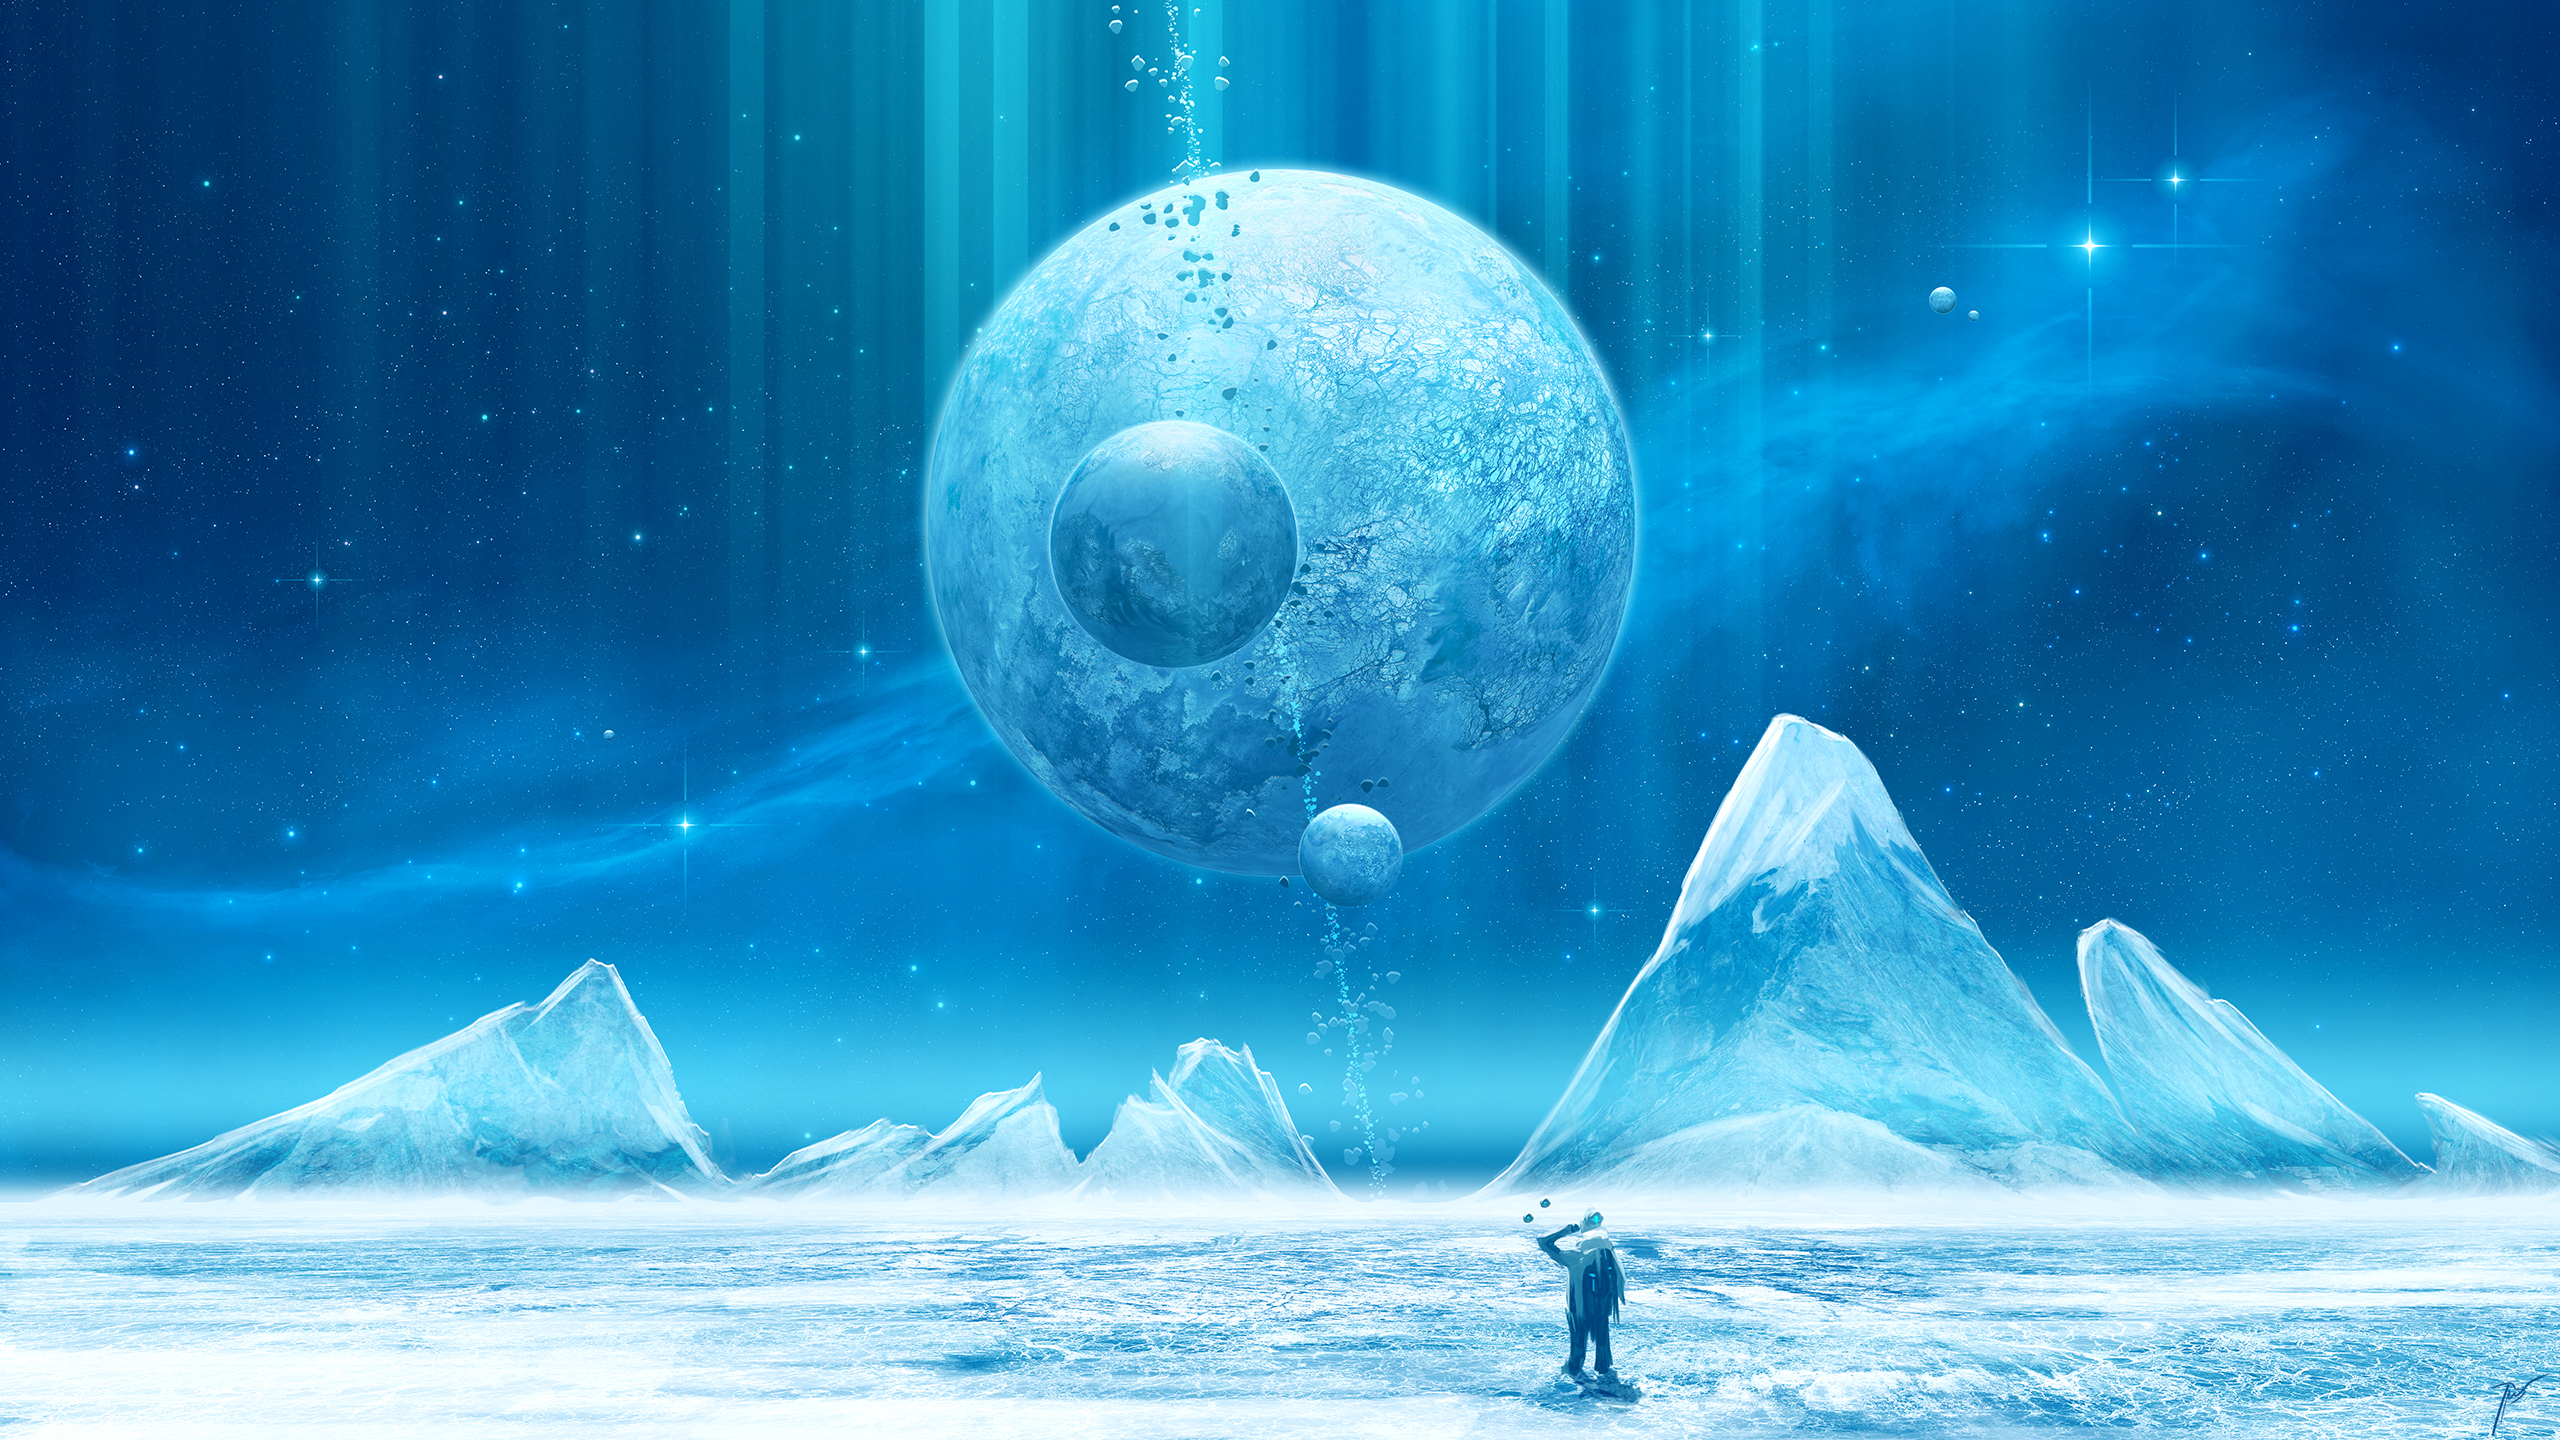 JoeyJazz Space Art Ice Science Fiction Planet Blue Stars Artwork 2560x1440